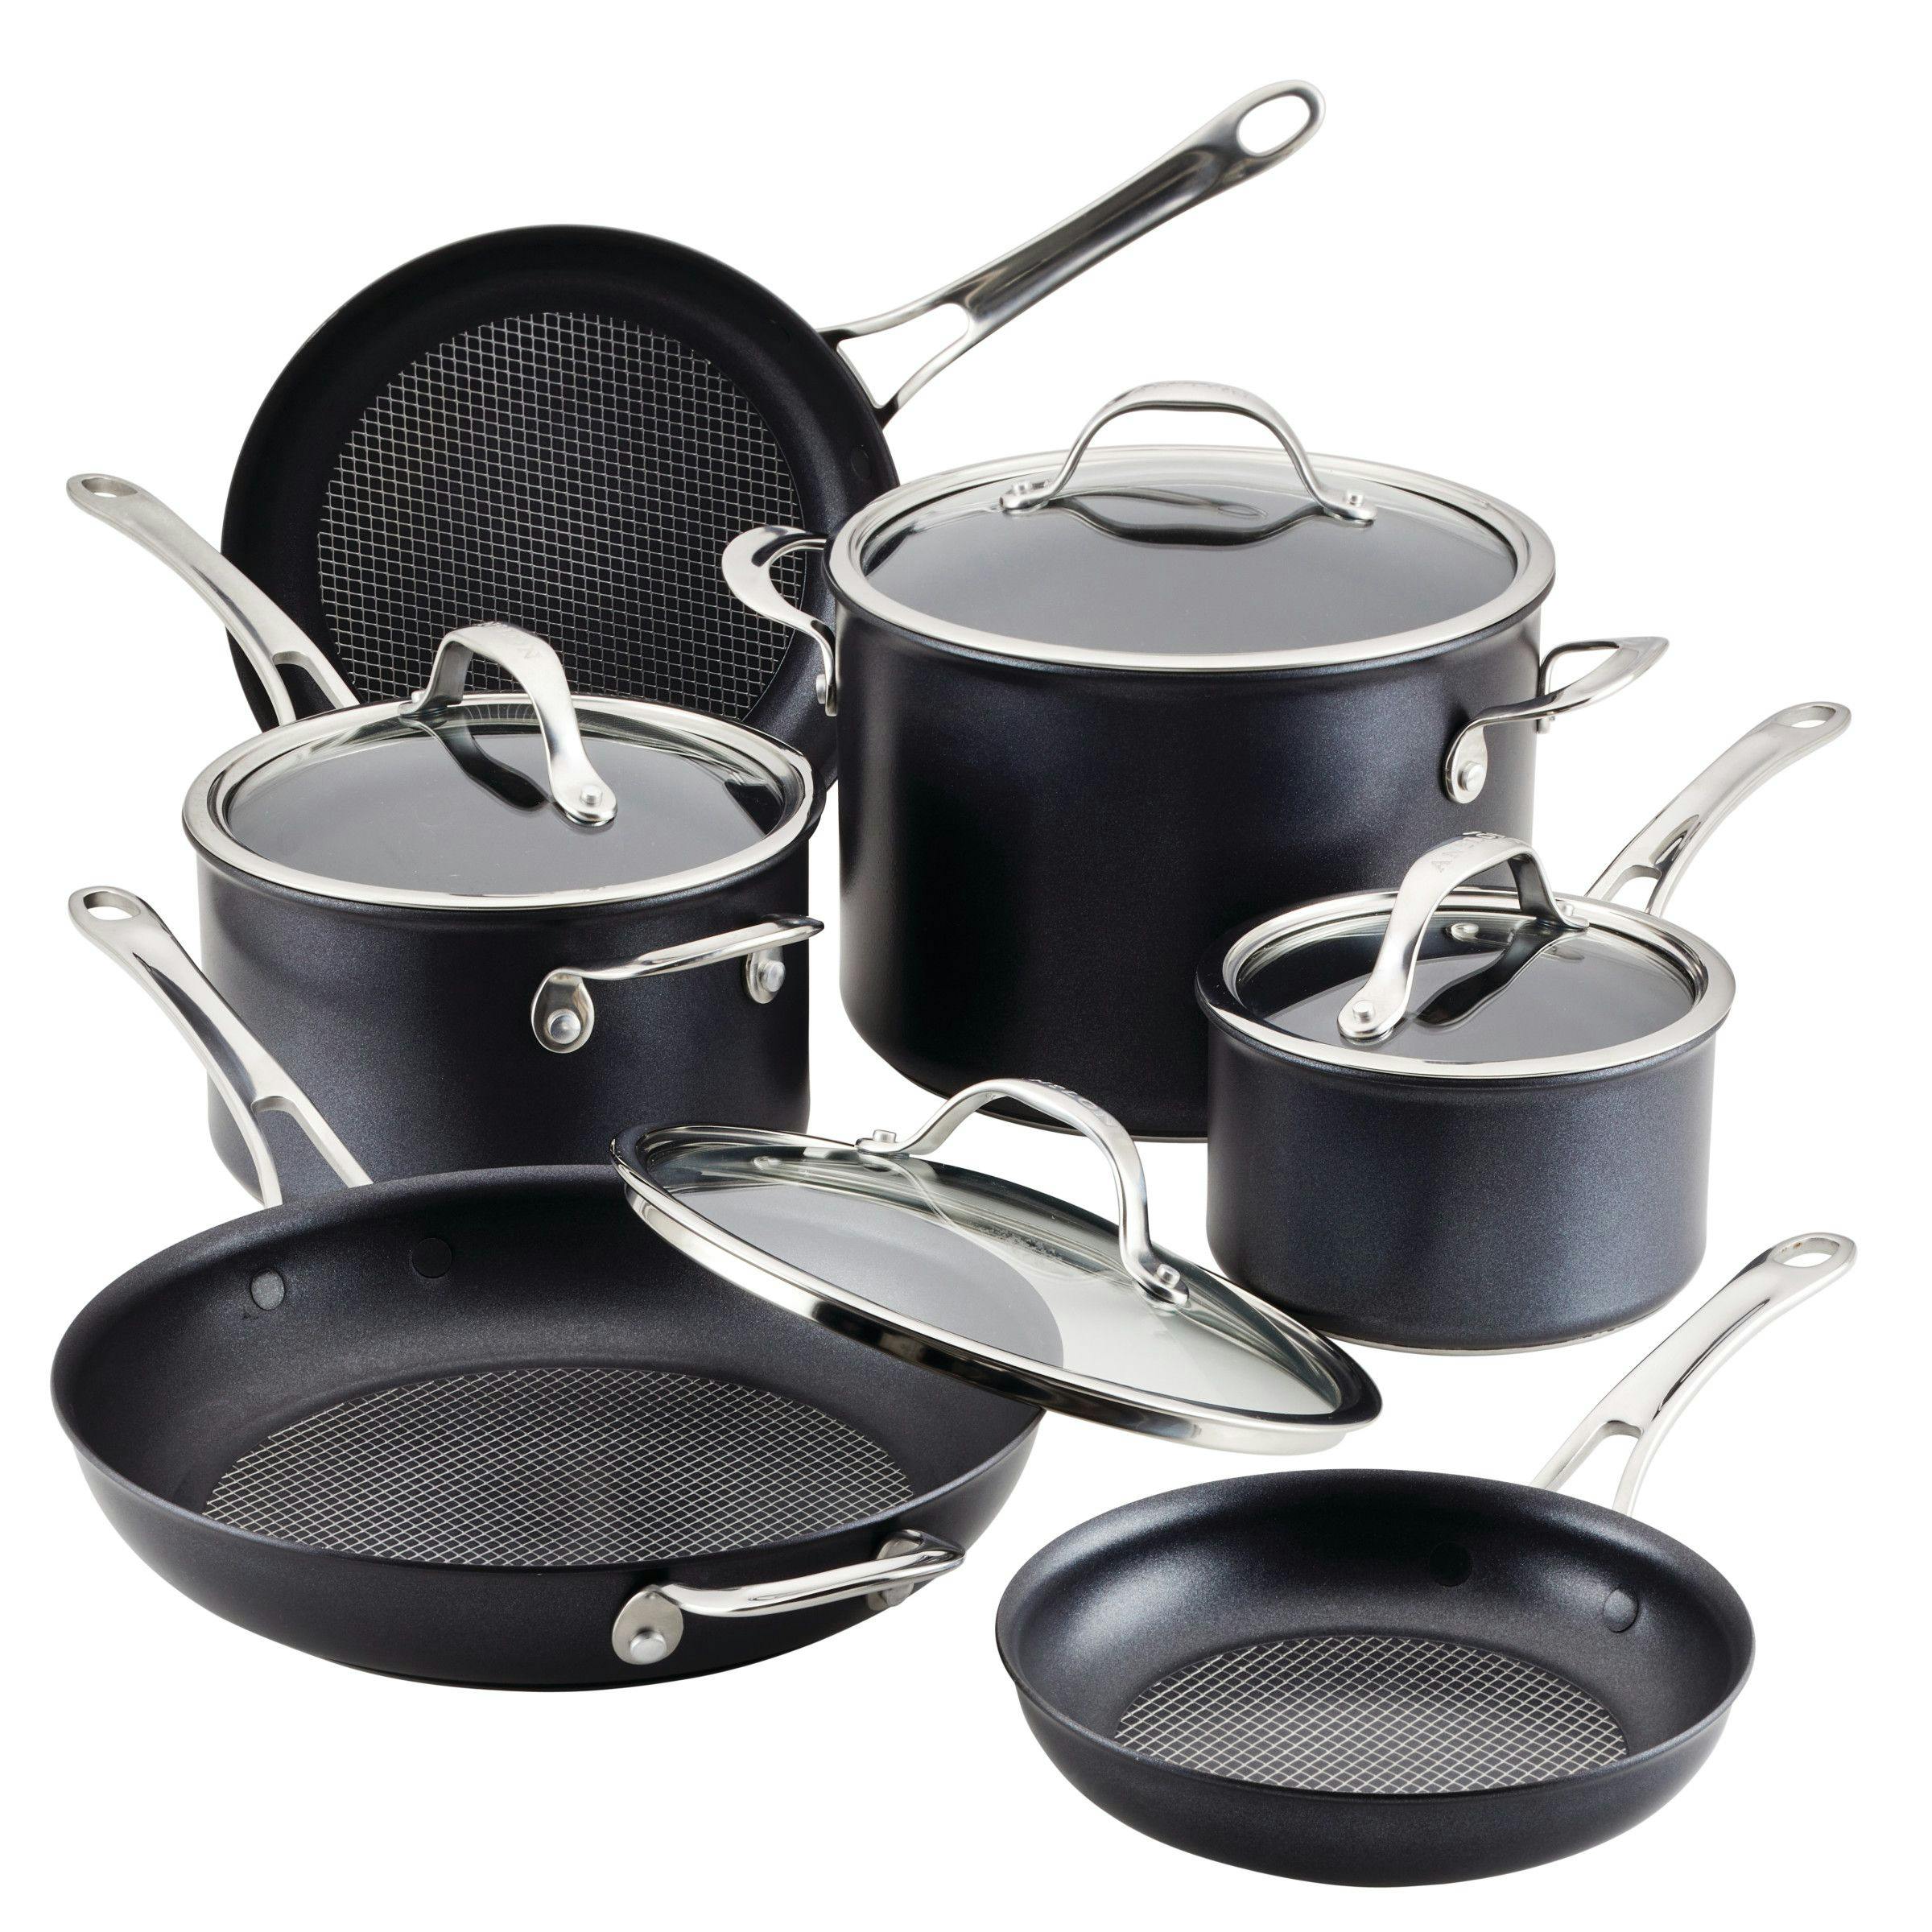 Anolon X Hybrid Nonstick Aluminum Nonstick Cookware Induction Pots and Pans Set, 10-Piece, Super Dark Gray